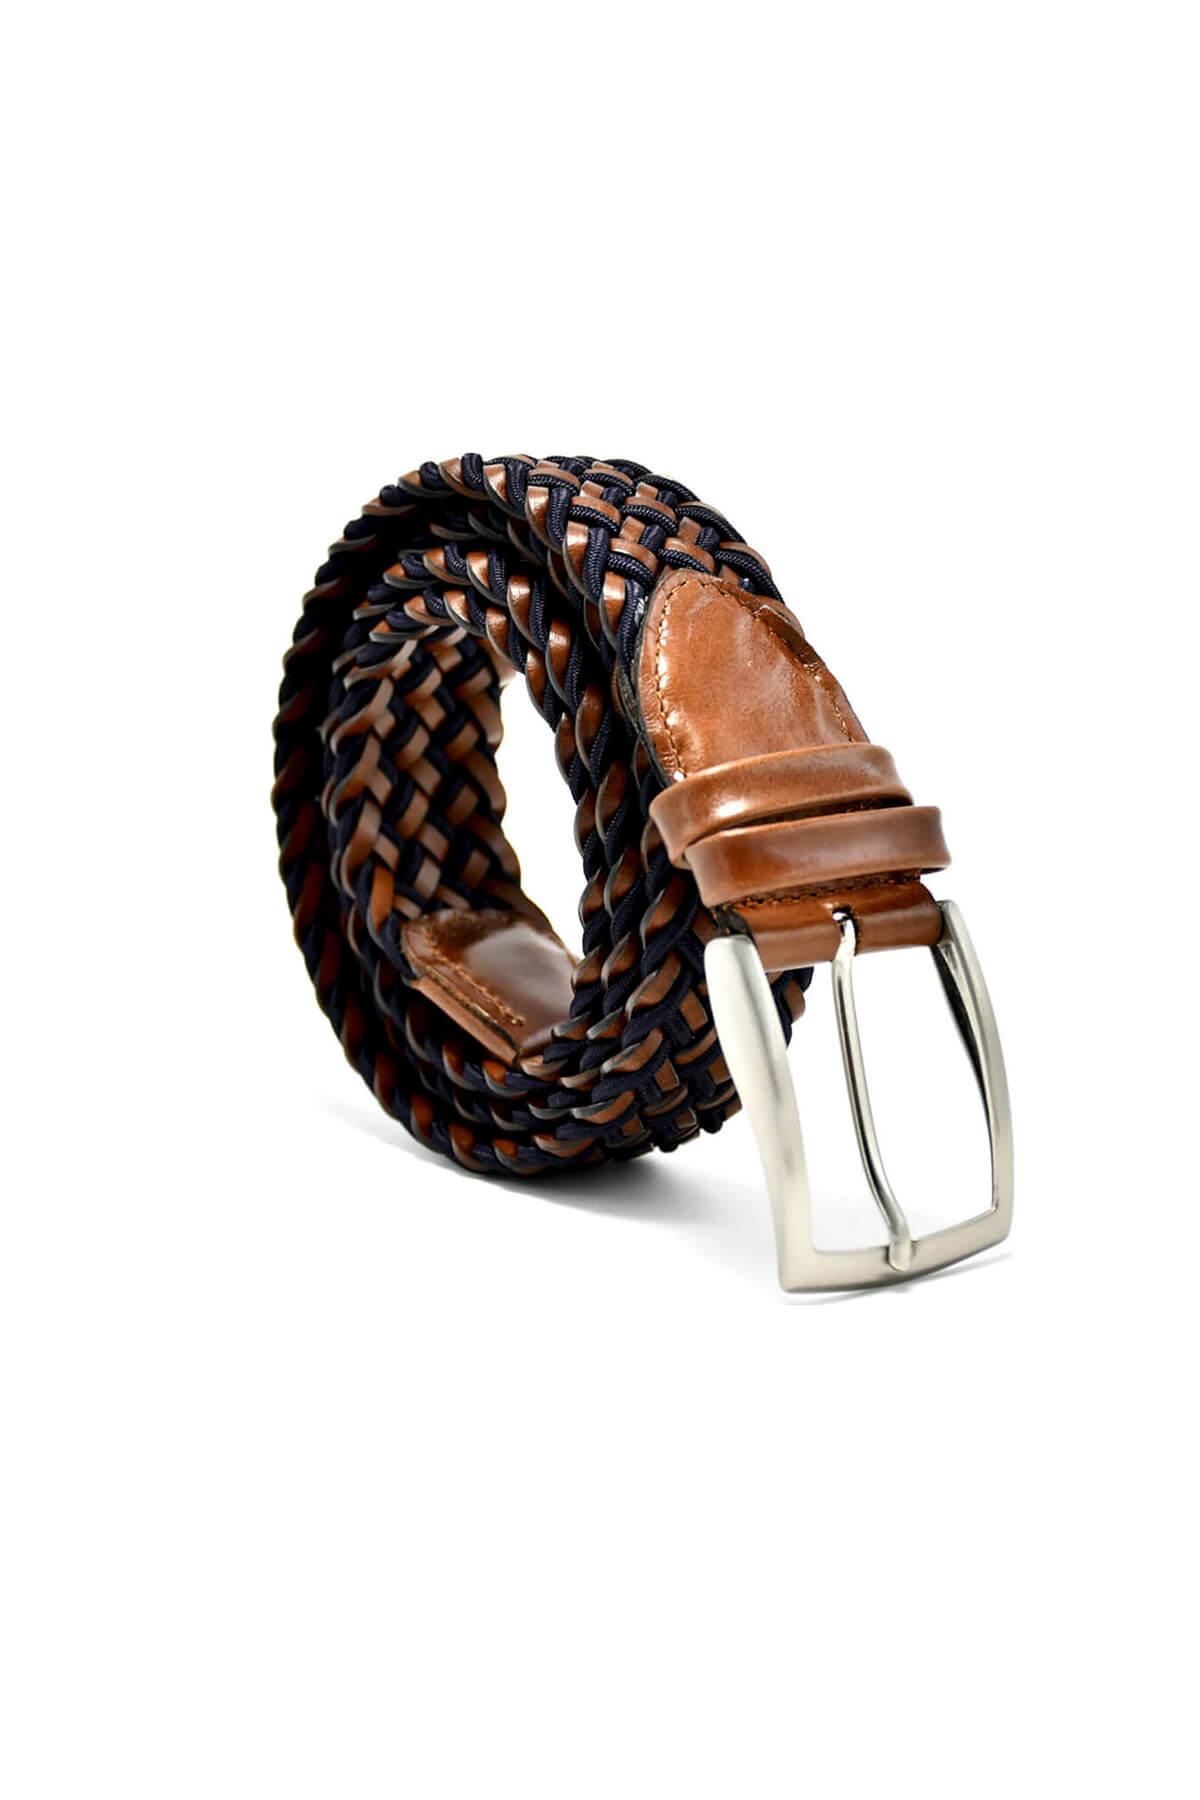 BOR Leather Braided Belt